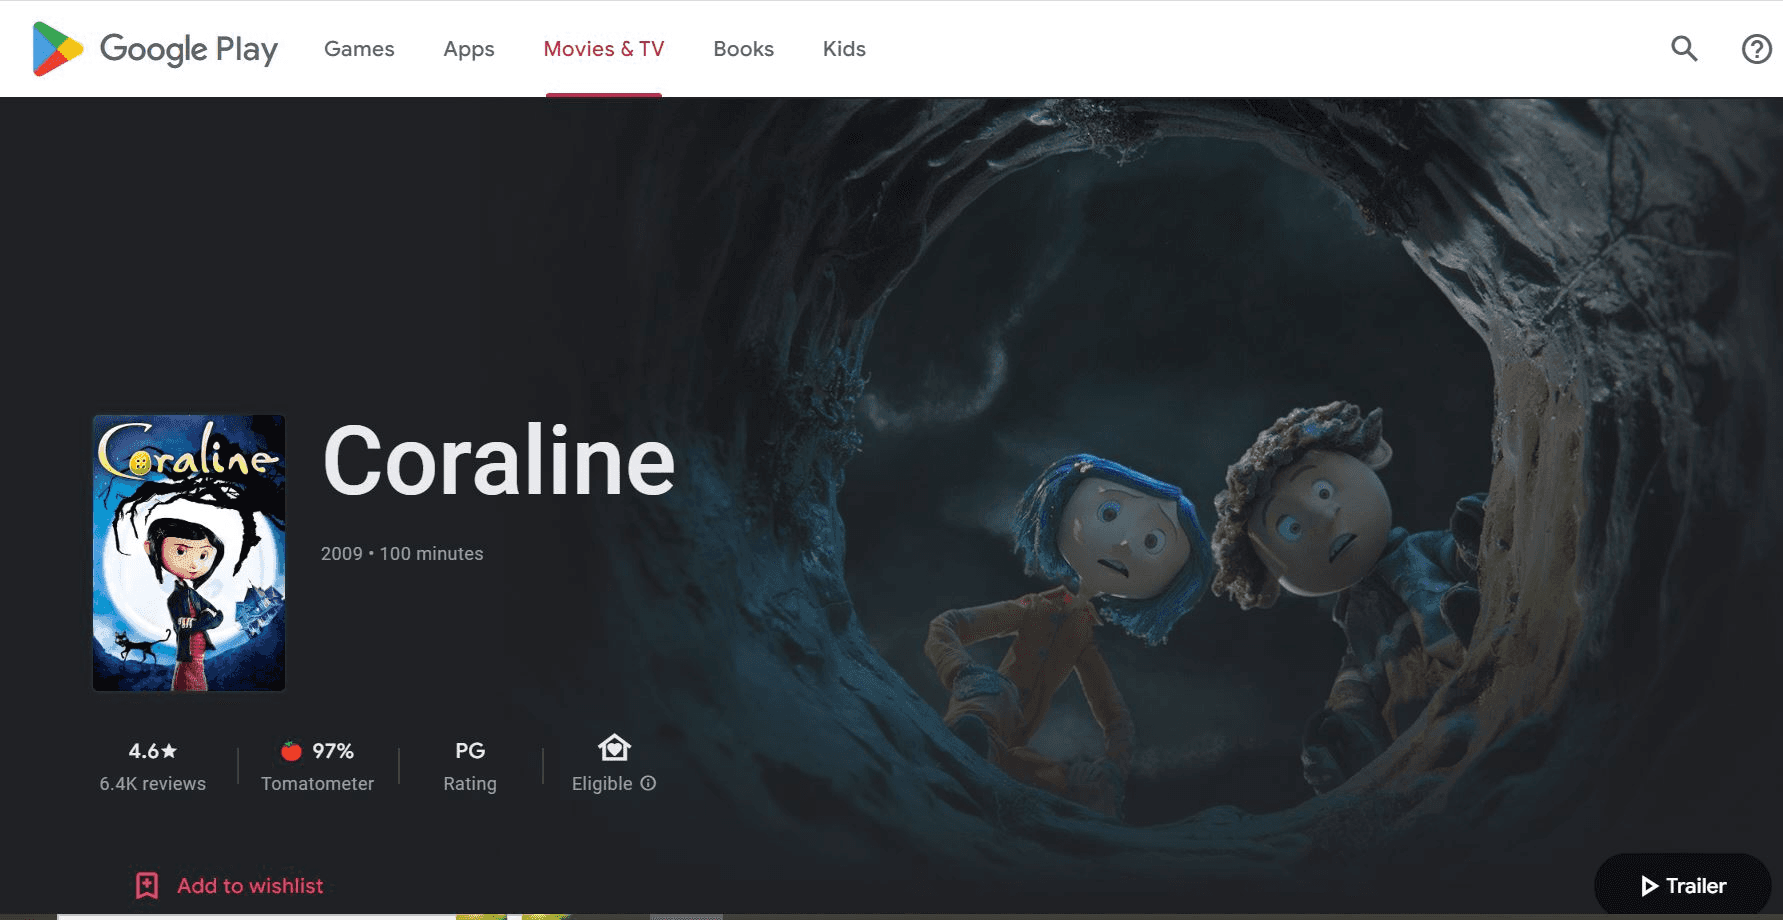 Coraline on Google Play